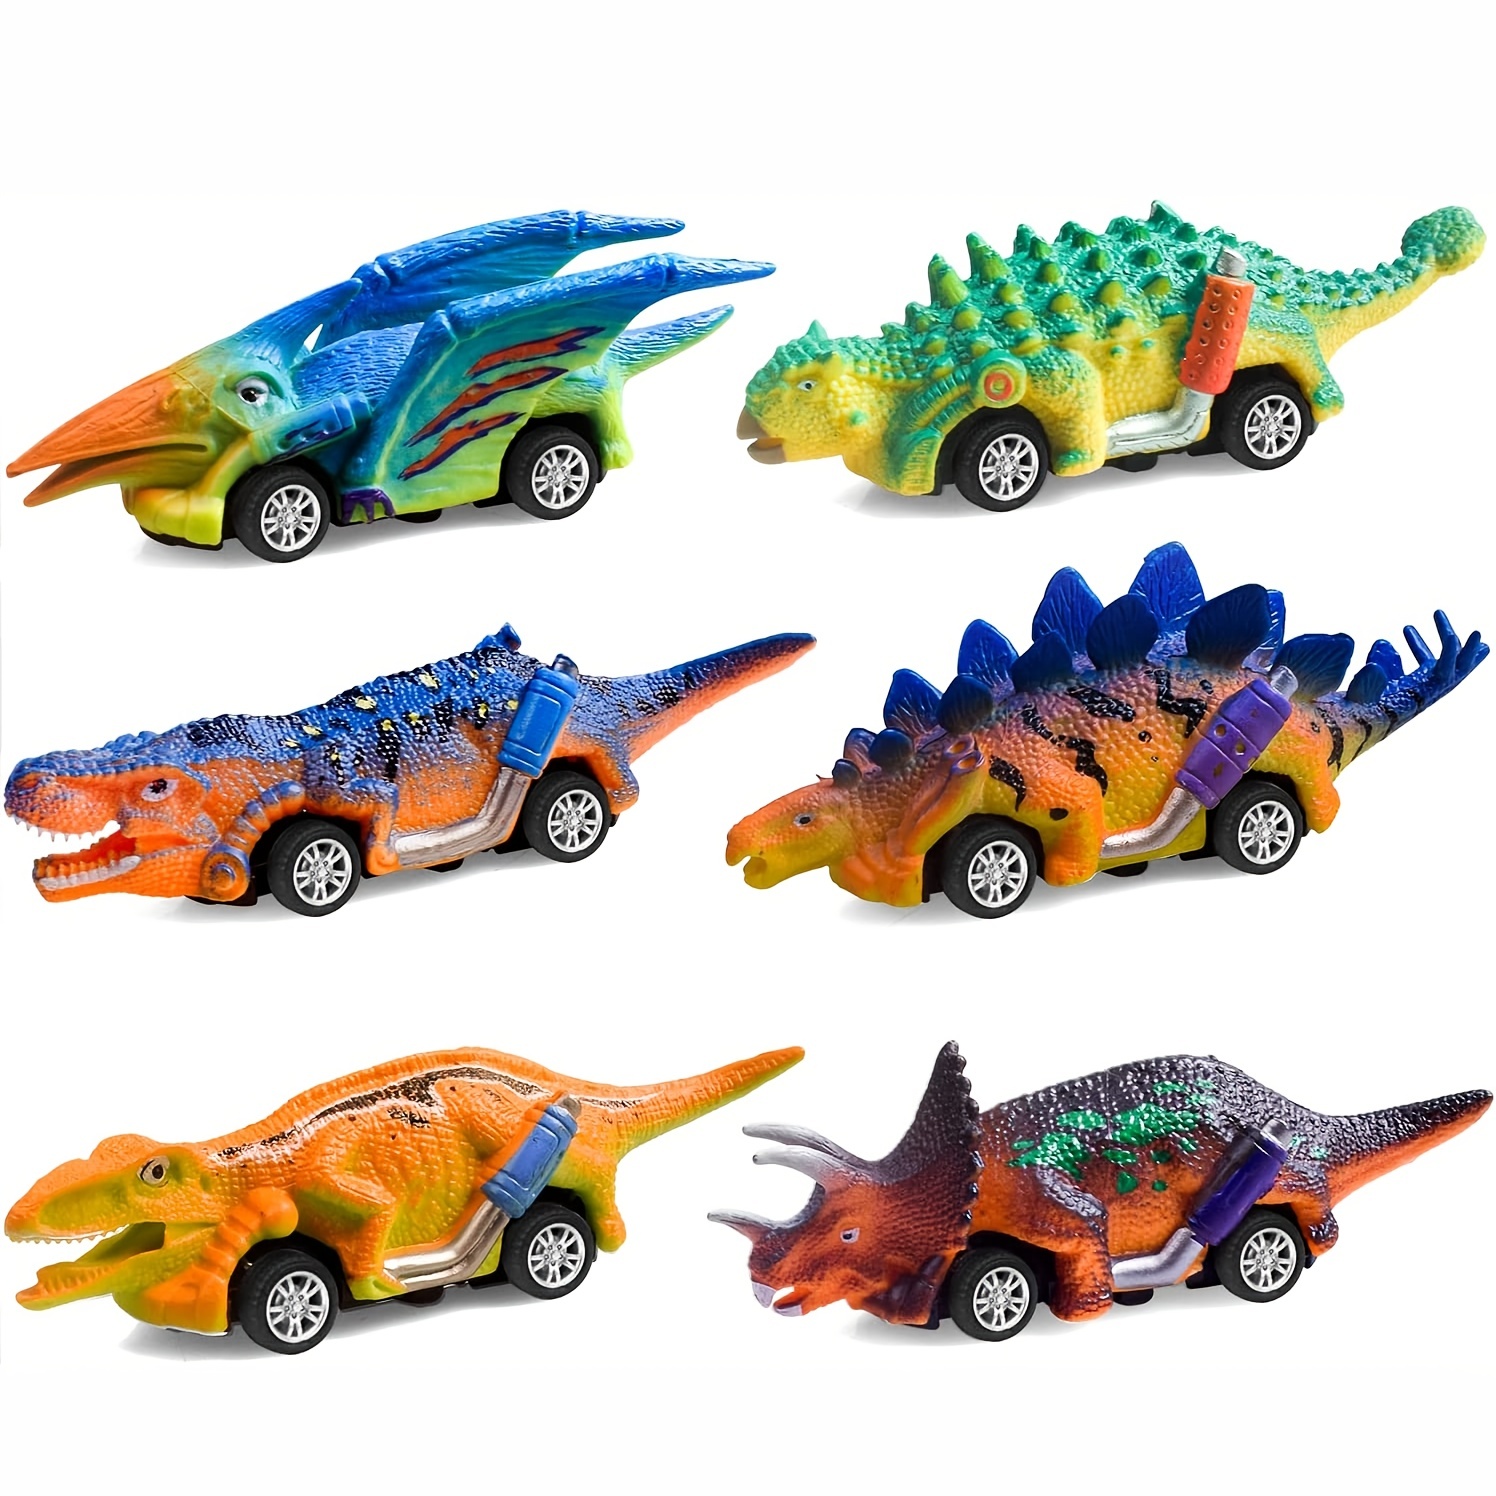  DINOBROS Coches de juguete de dinosaurio, paquete de 6